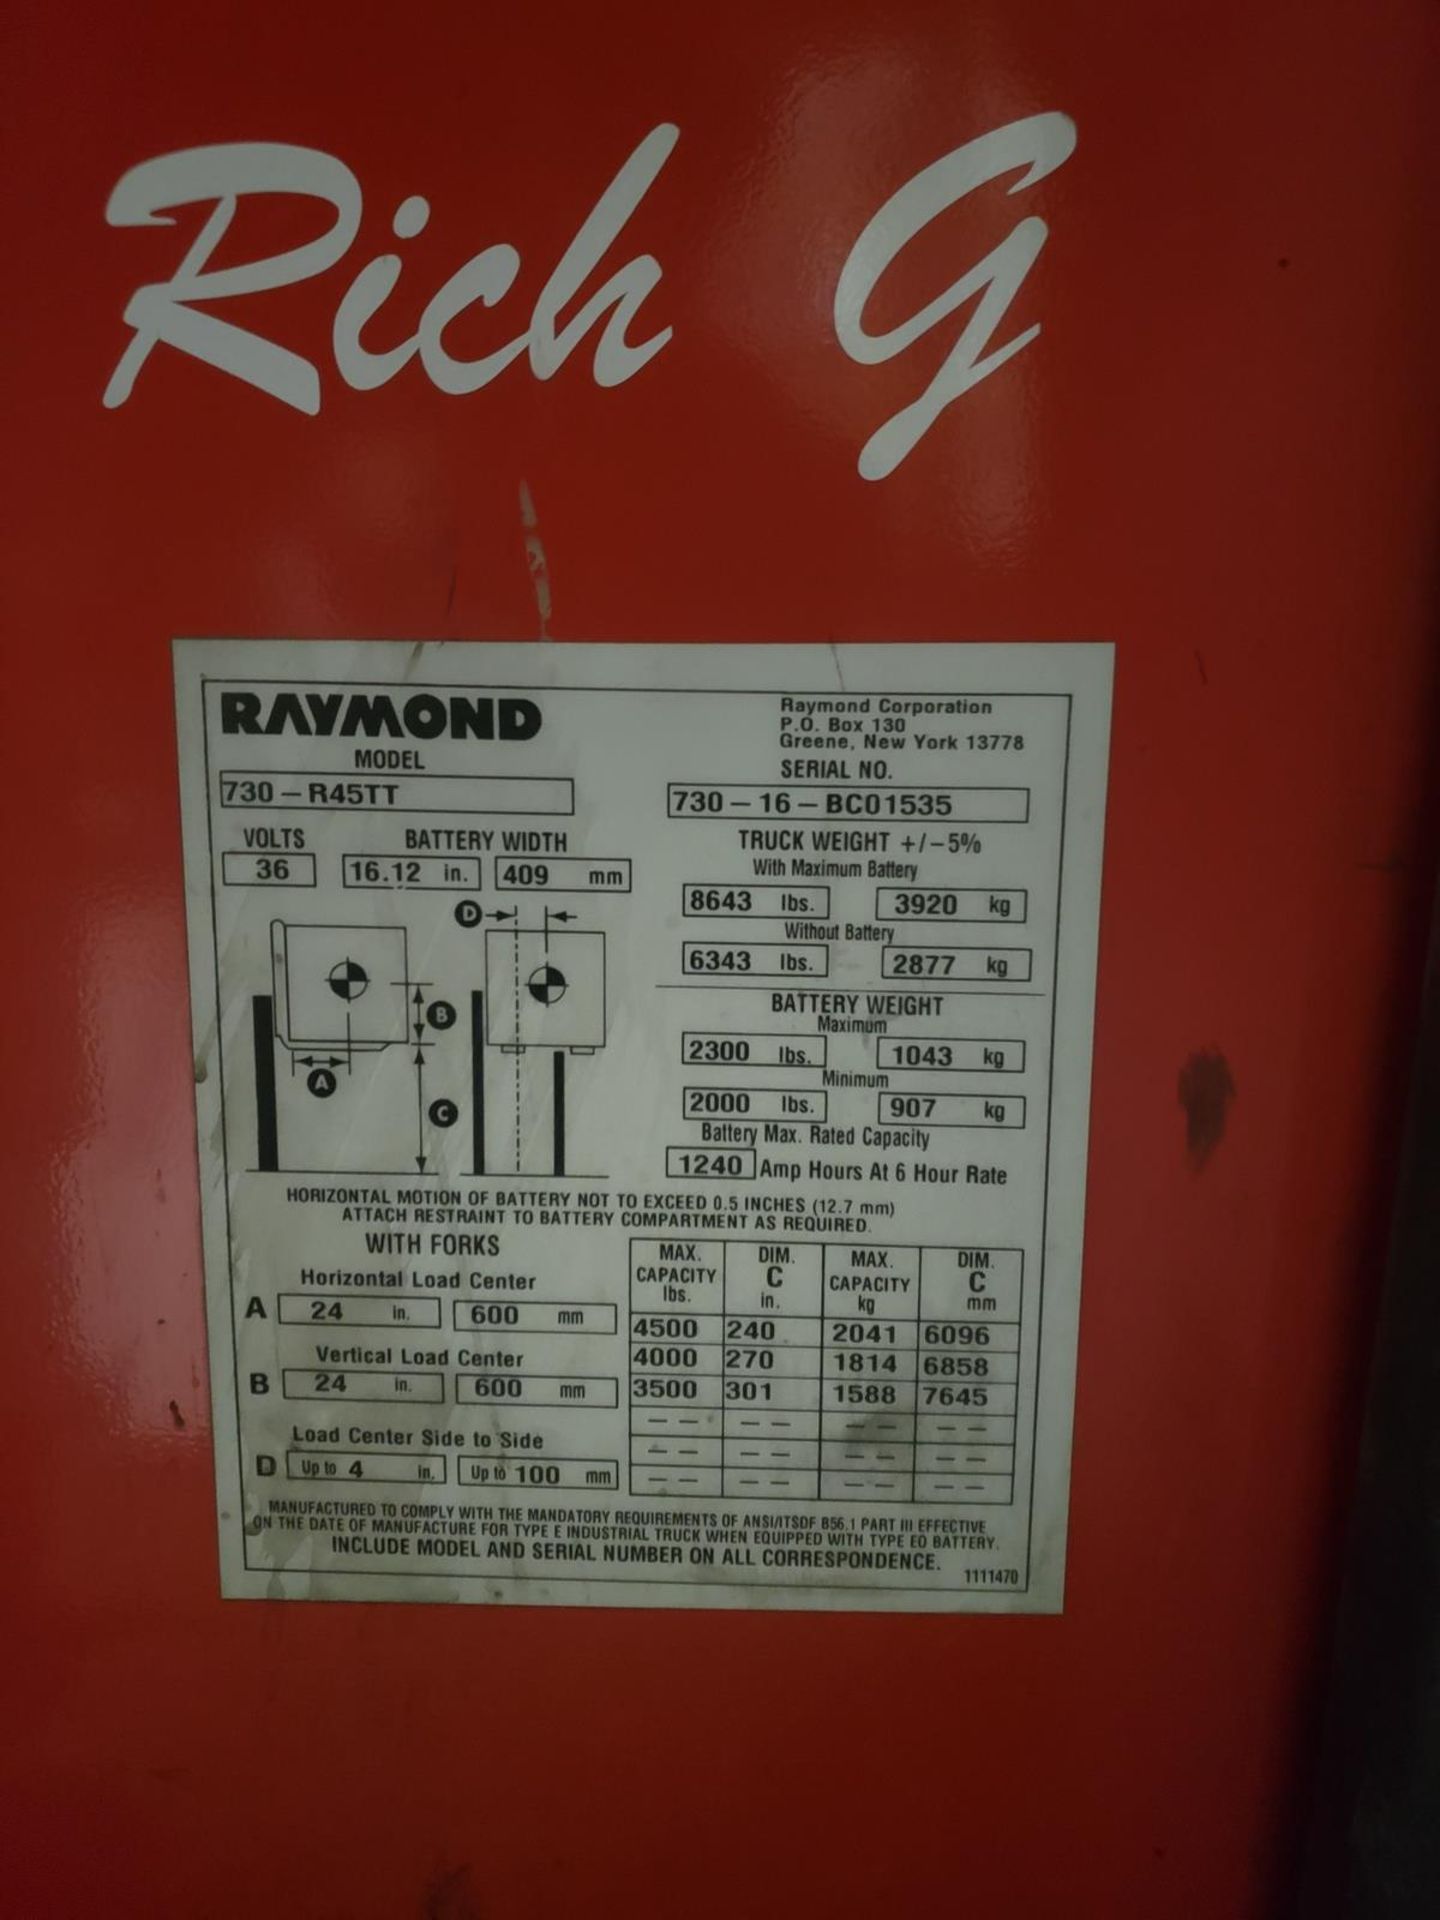 Raymond Electric Standup Forklift, 36 Volt, 4500 Lb Capacity, M# 730-R45TT, S/N 730 | Rig Fee $100 - Image 2 of 4